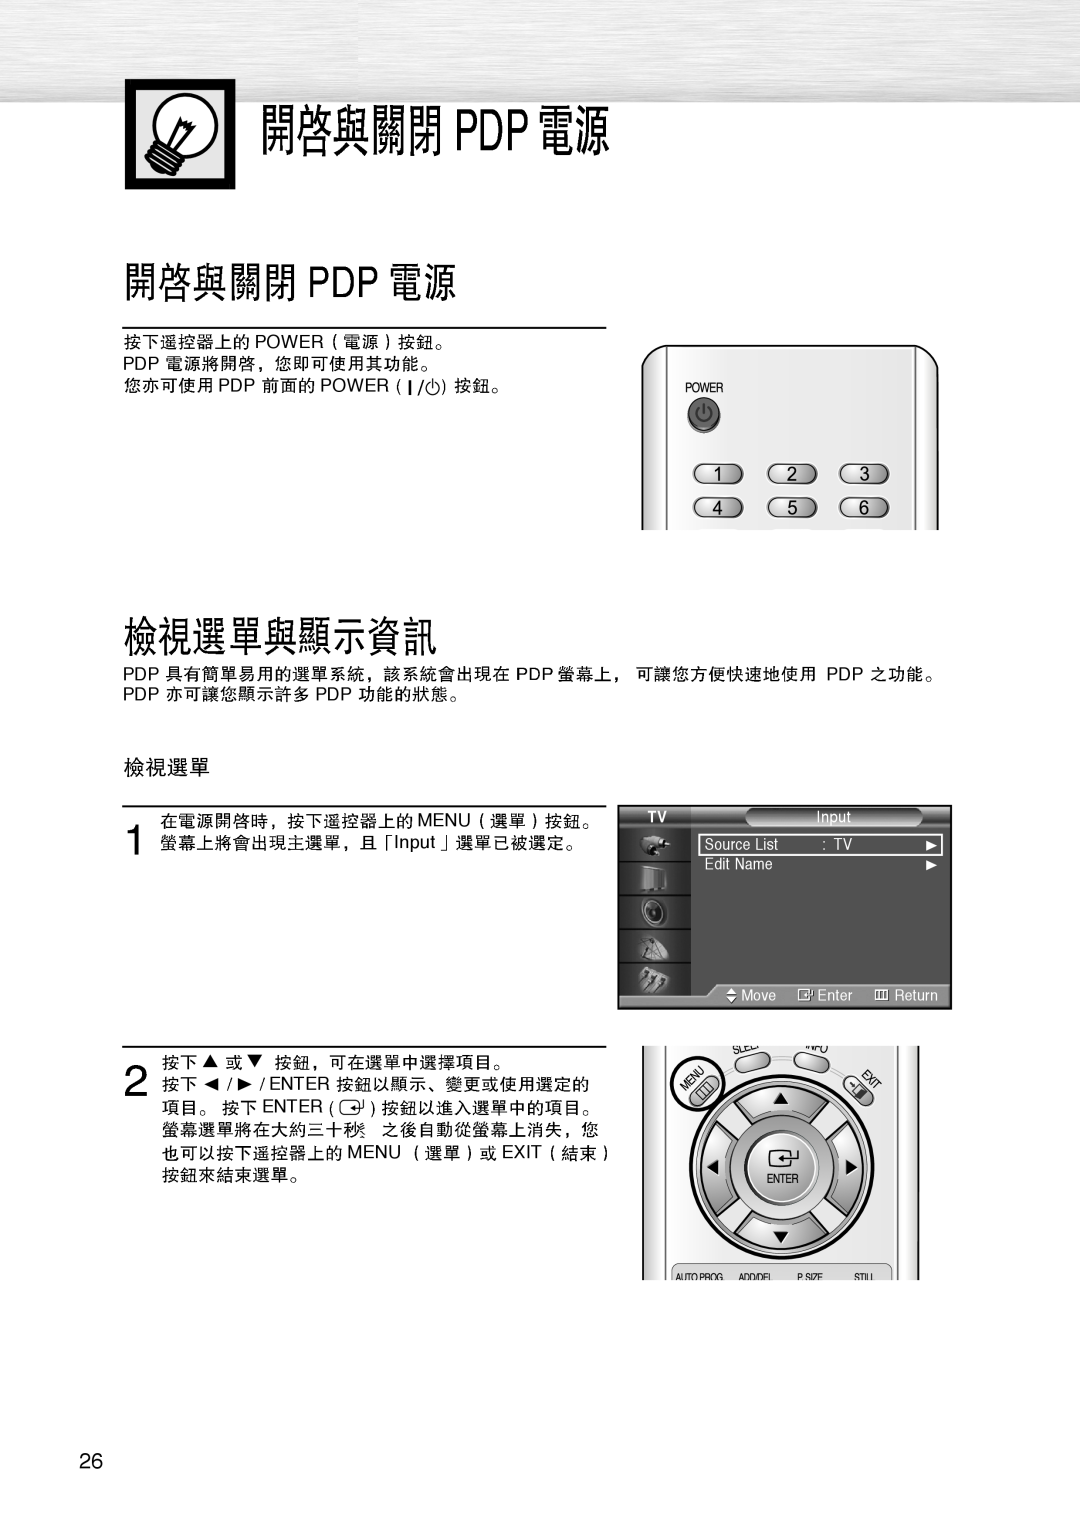 Samsung PL-42D4S manual Power Pdp Pdp Power Pdp Pdp Pdp Pdp, Menu Exit, MENUInput 